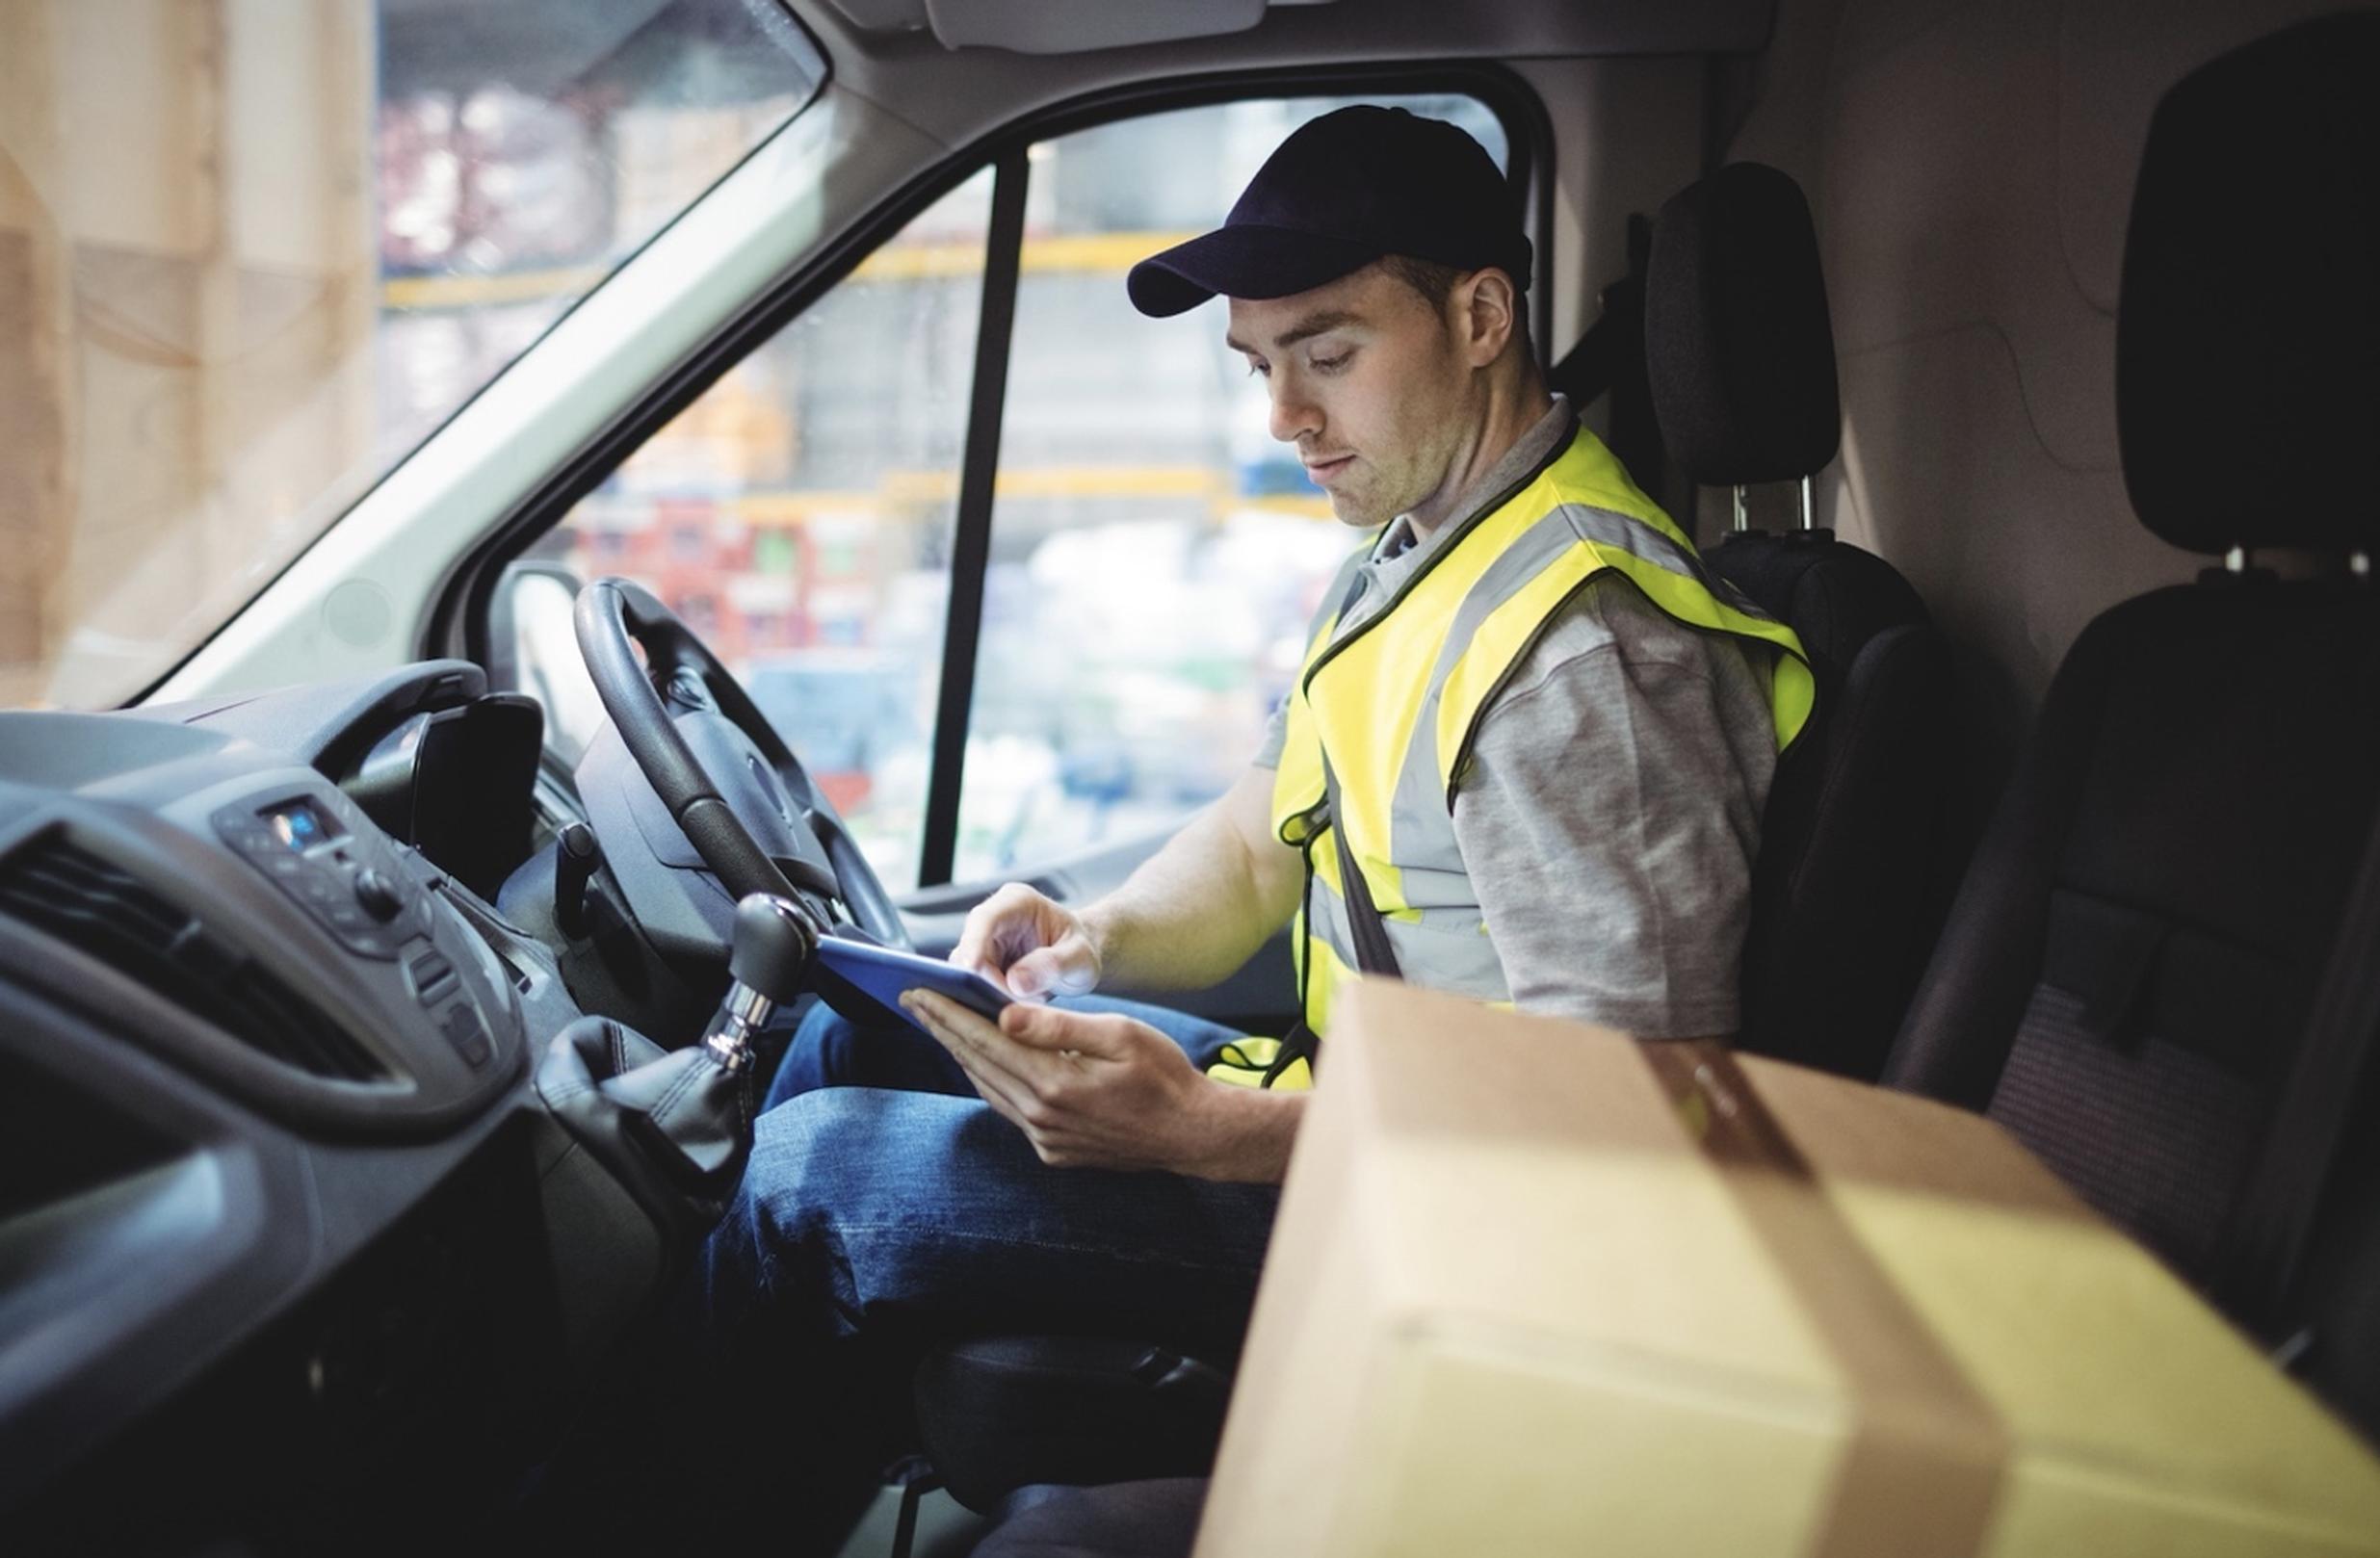 Digitalised kerbside management schemes could make the lives of delivery drivers easier